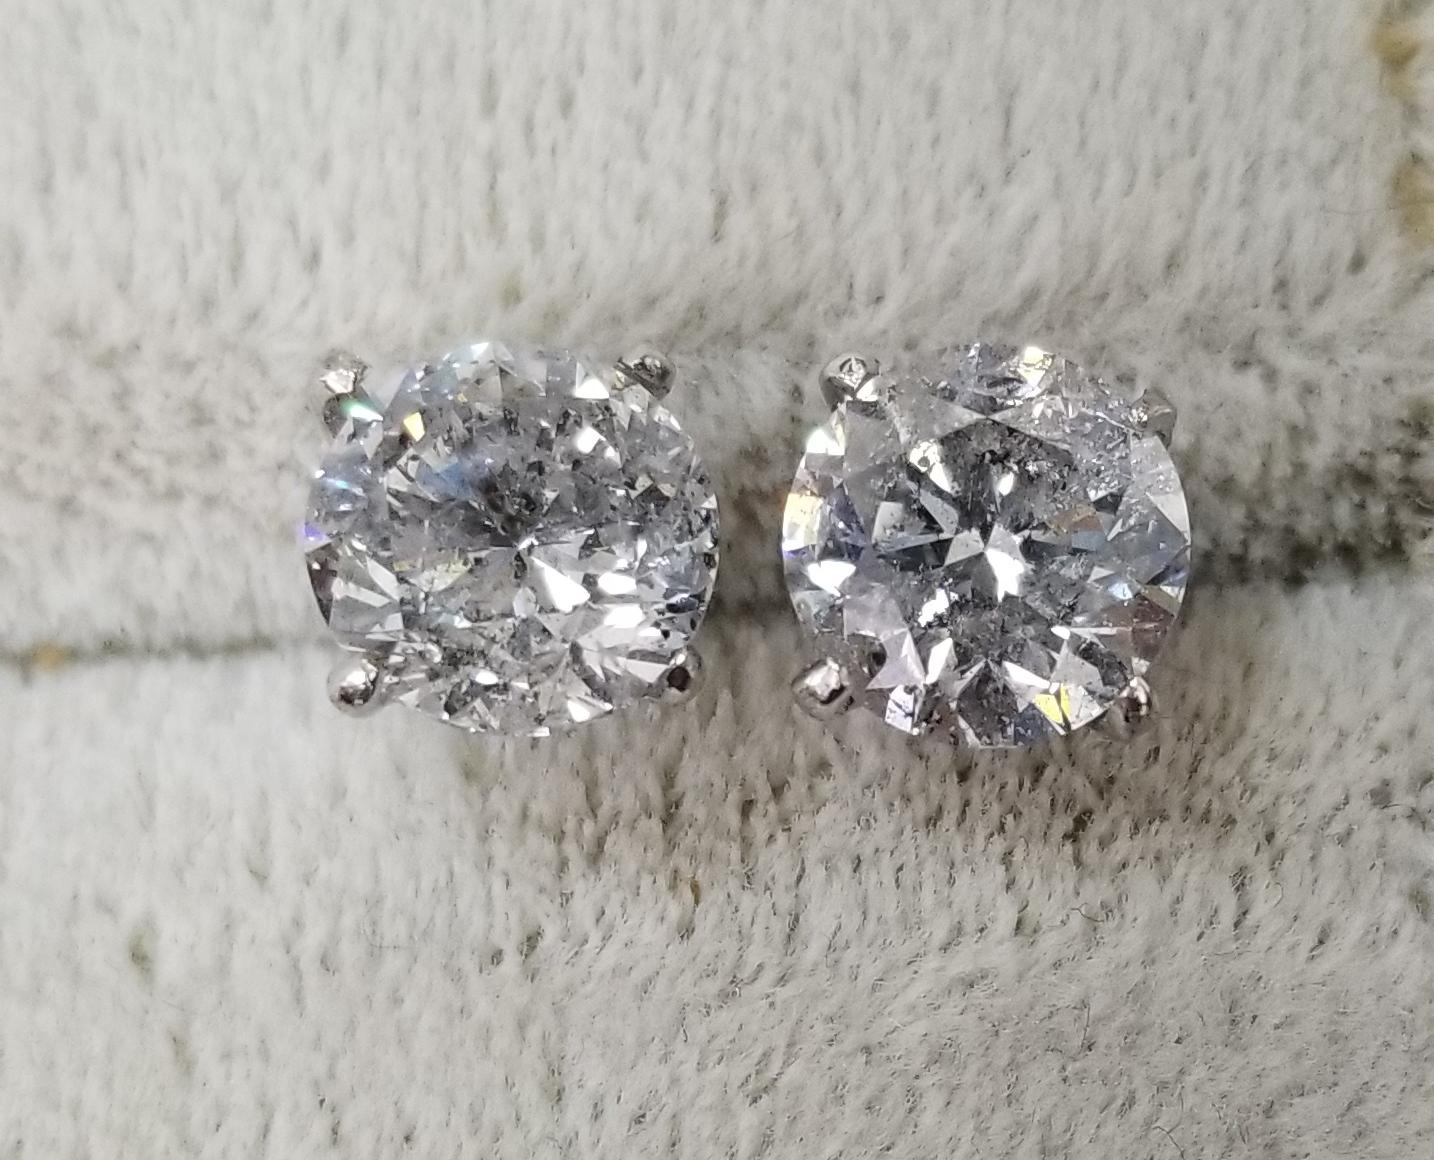 14k white gold 4.05ct.s diamonds stud earrings, containing 2 brilliant cut diamonds; color 